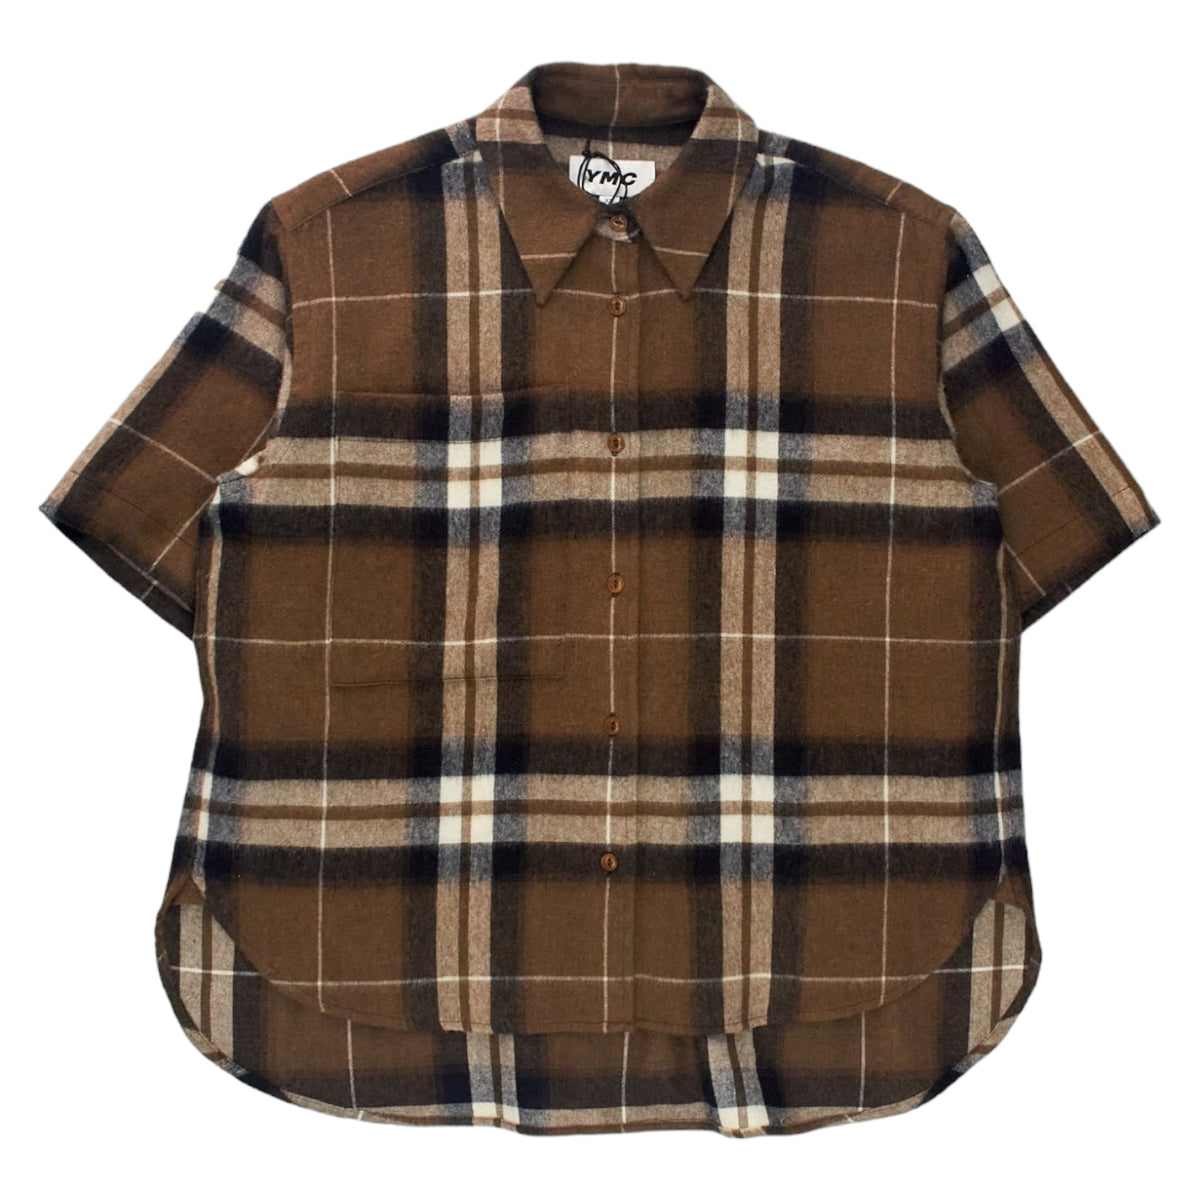 YMC Brown Plaid Flannel Shirt